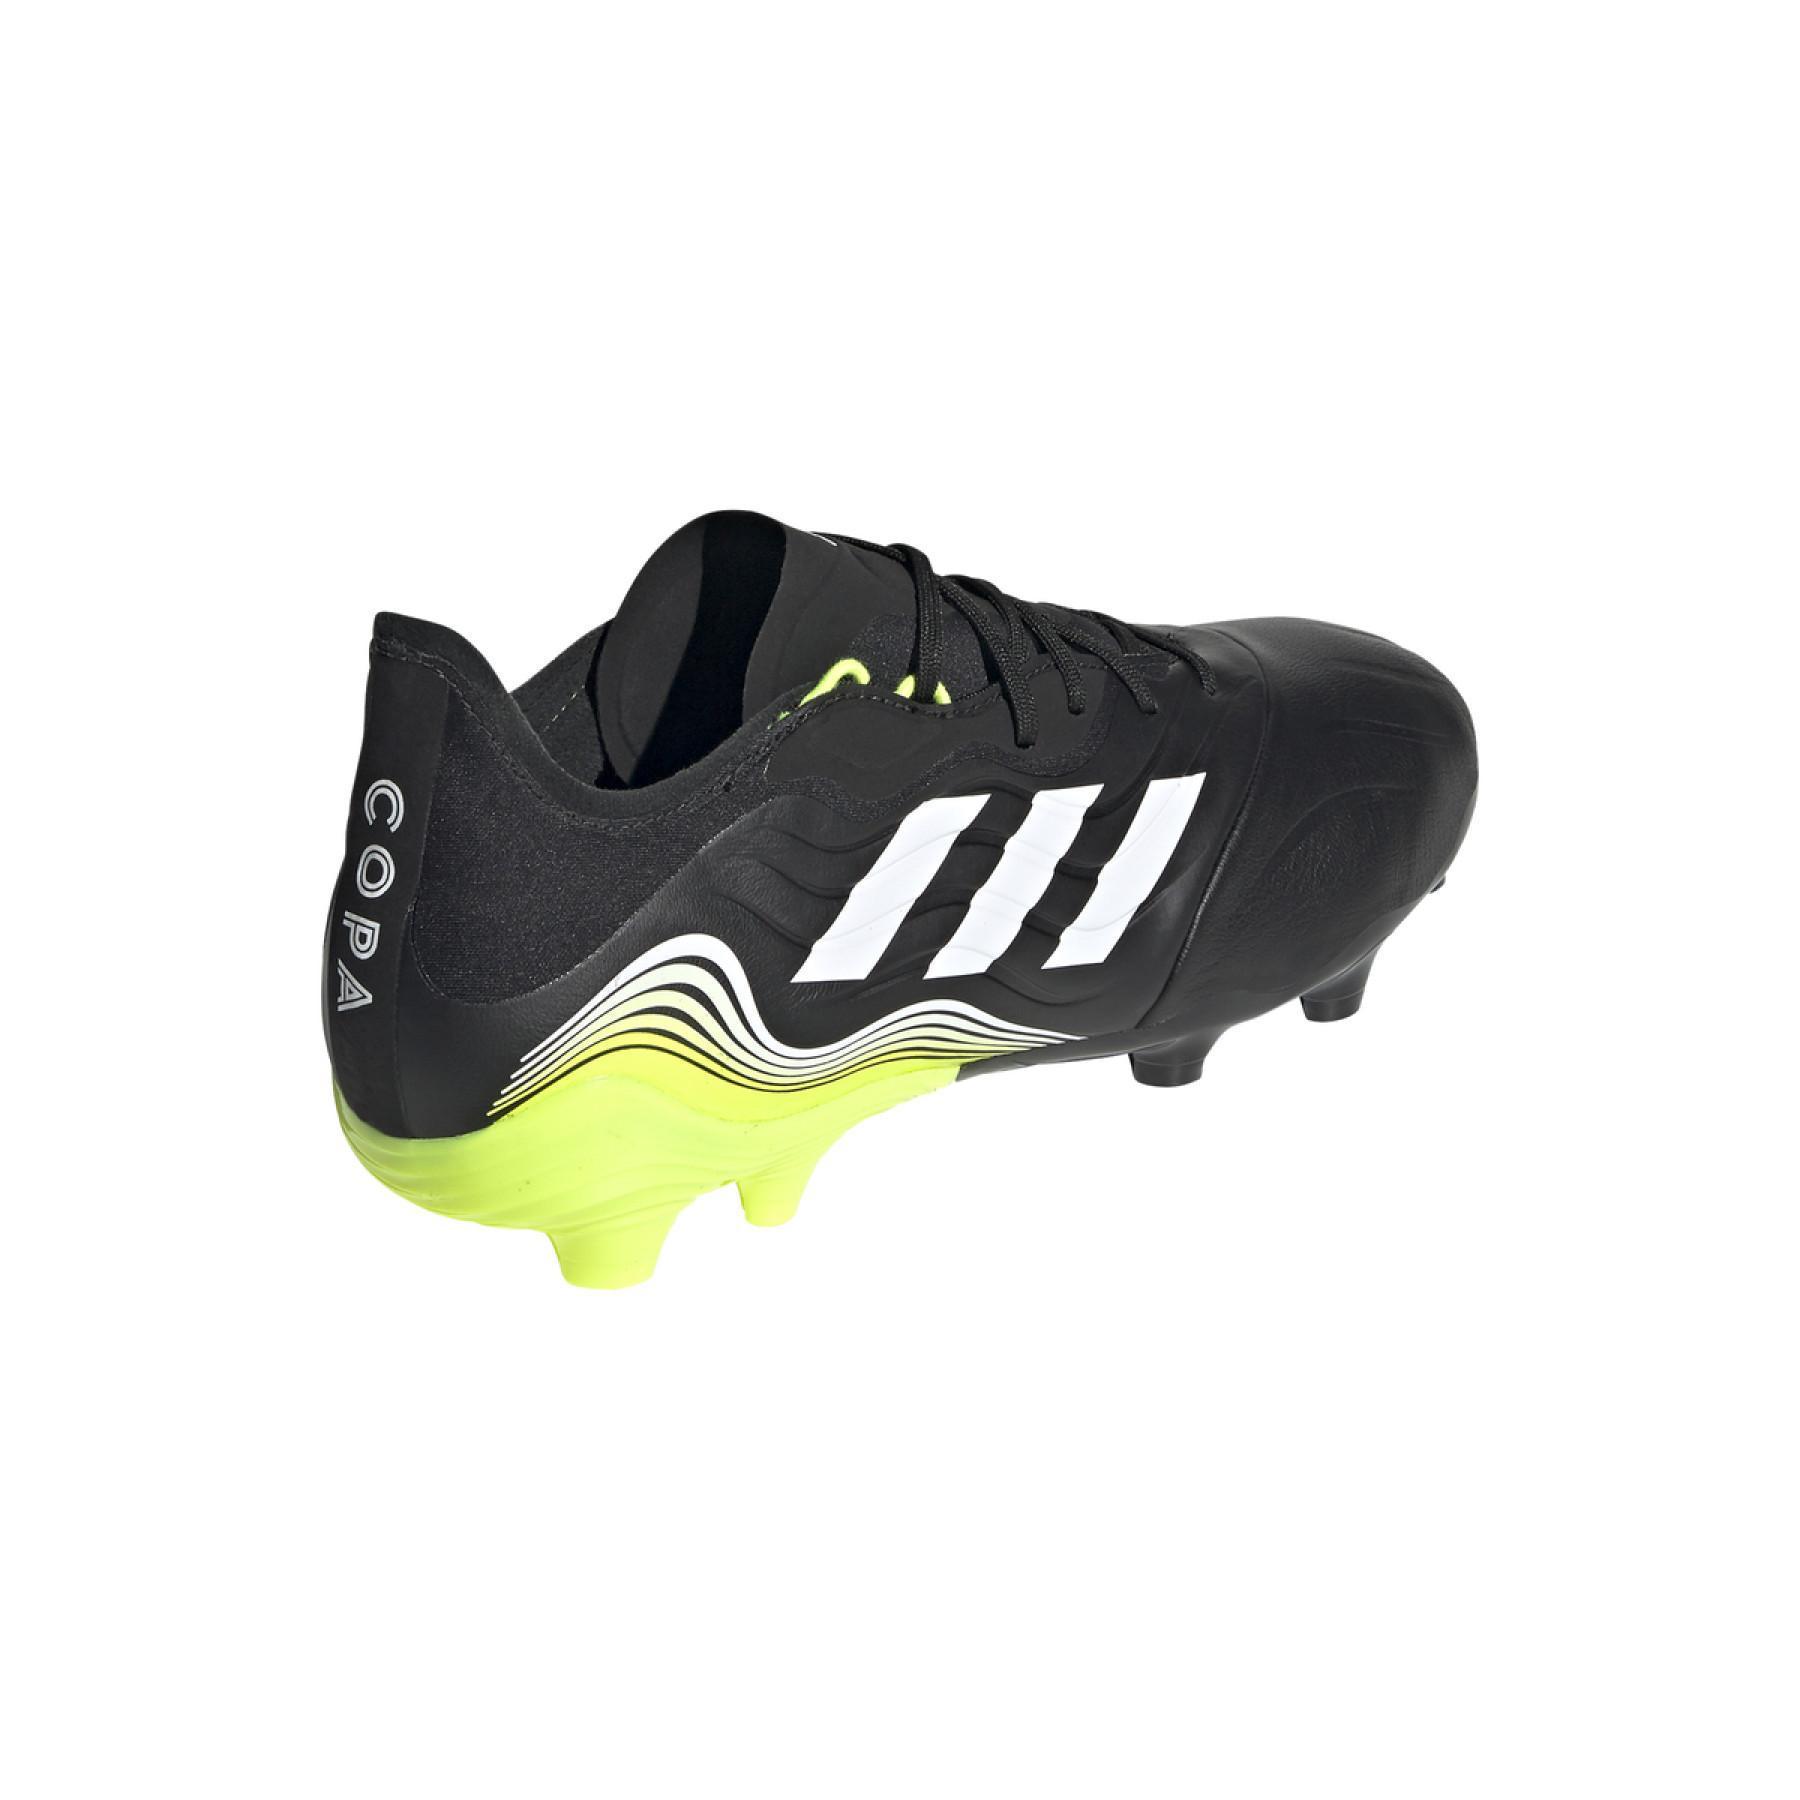 Soccer shoes adidas Copa Sense.2 FG